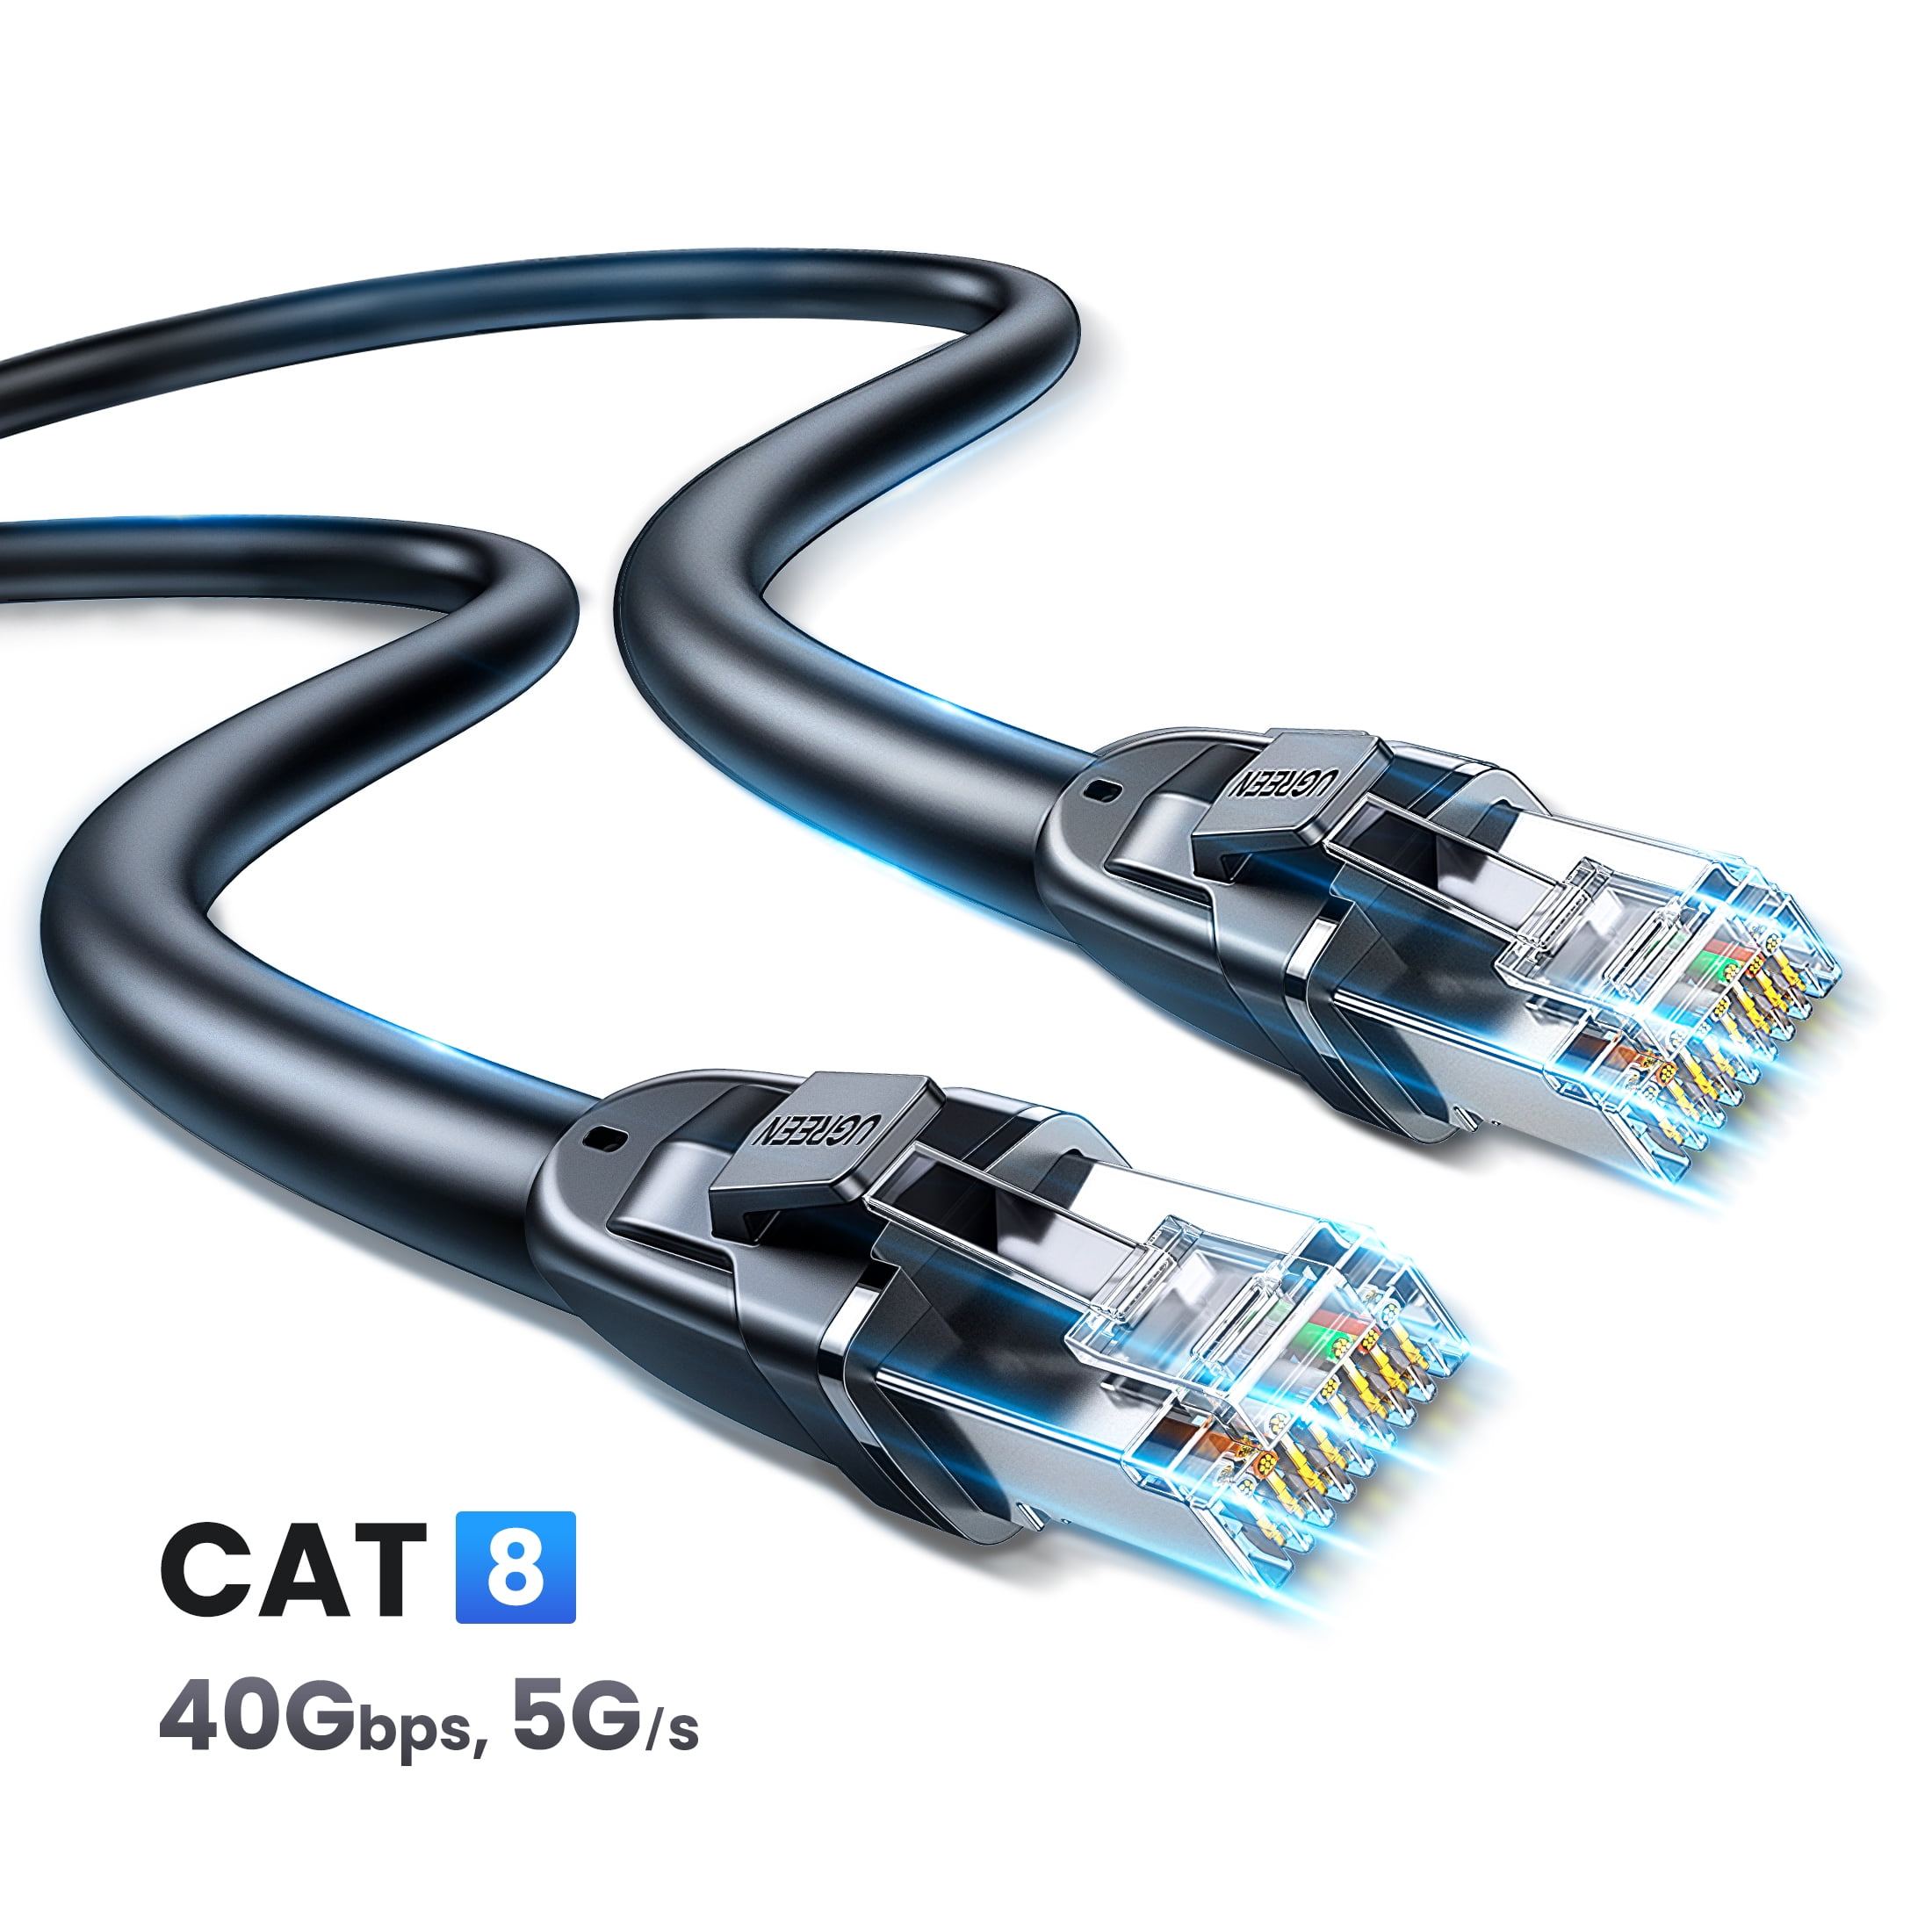 CAT7 Cat6 Cat5e Ethernet Network Cable STP UTP - 6FT 10FT 25FT 50FT 100FT -  lot